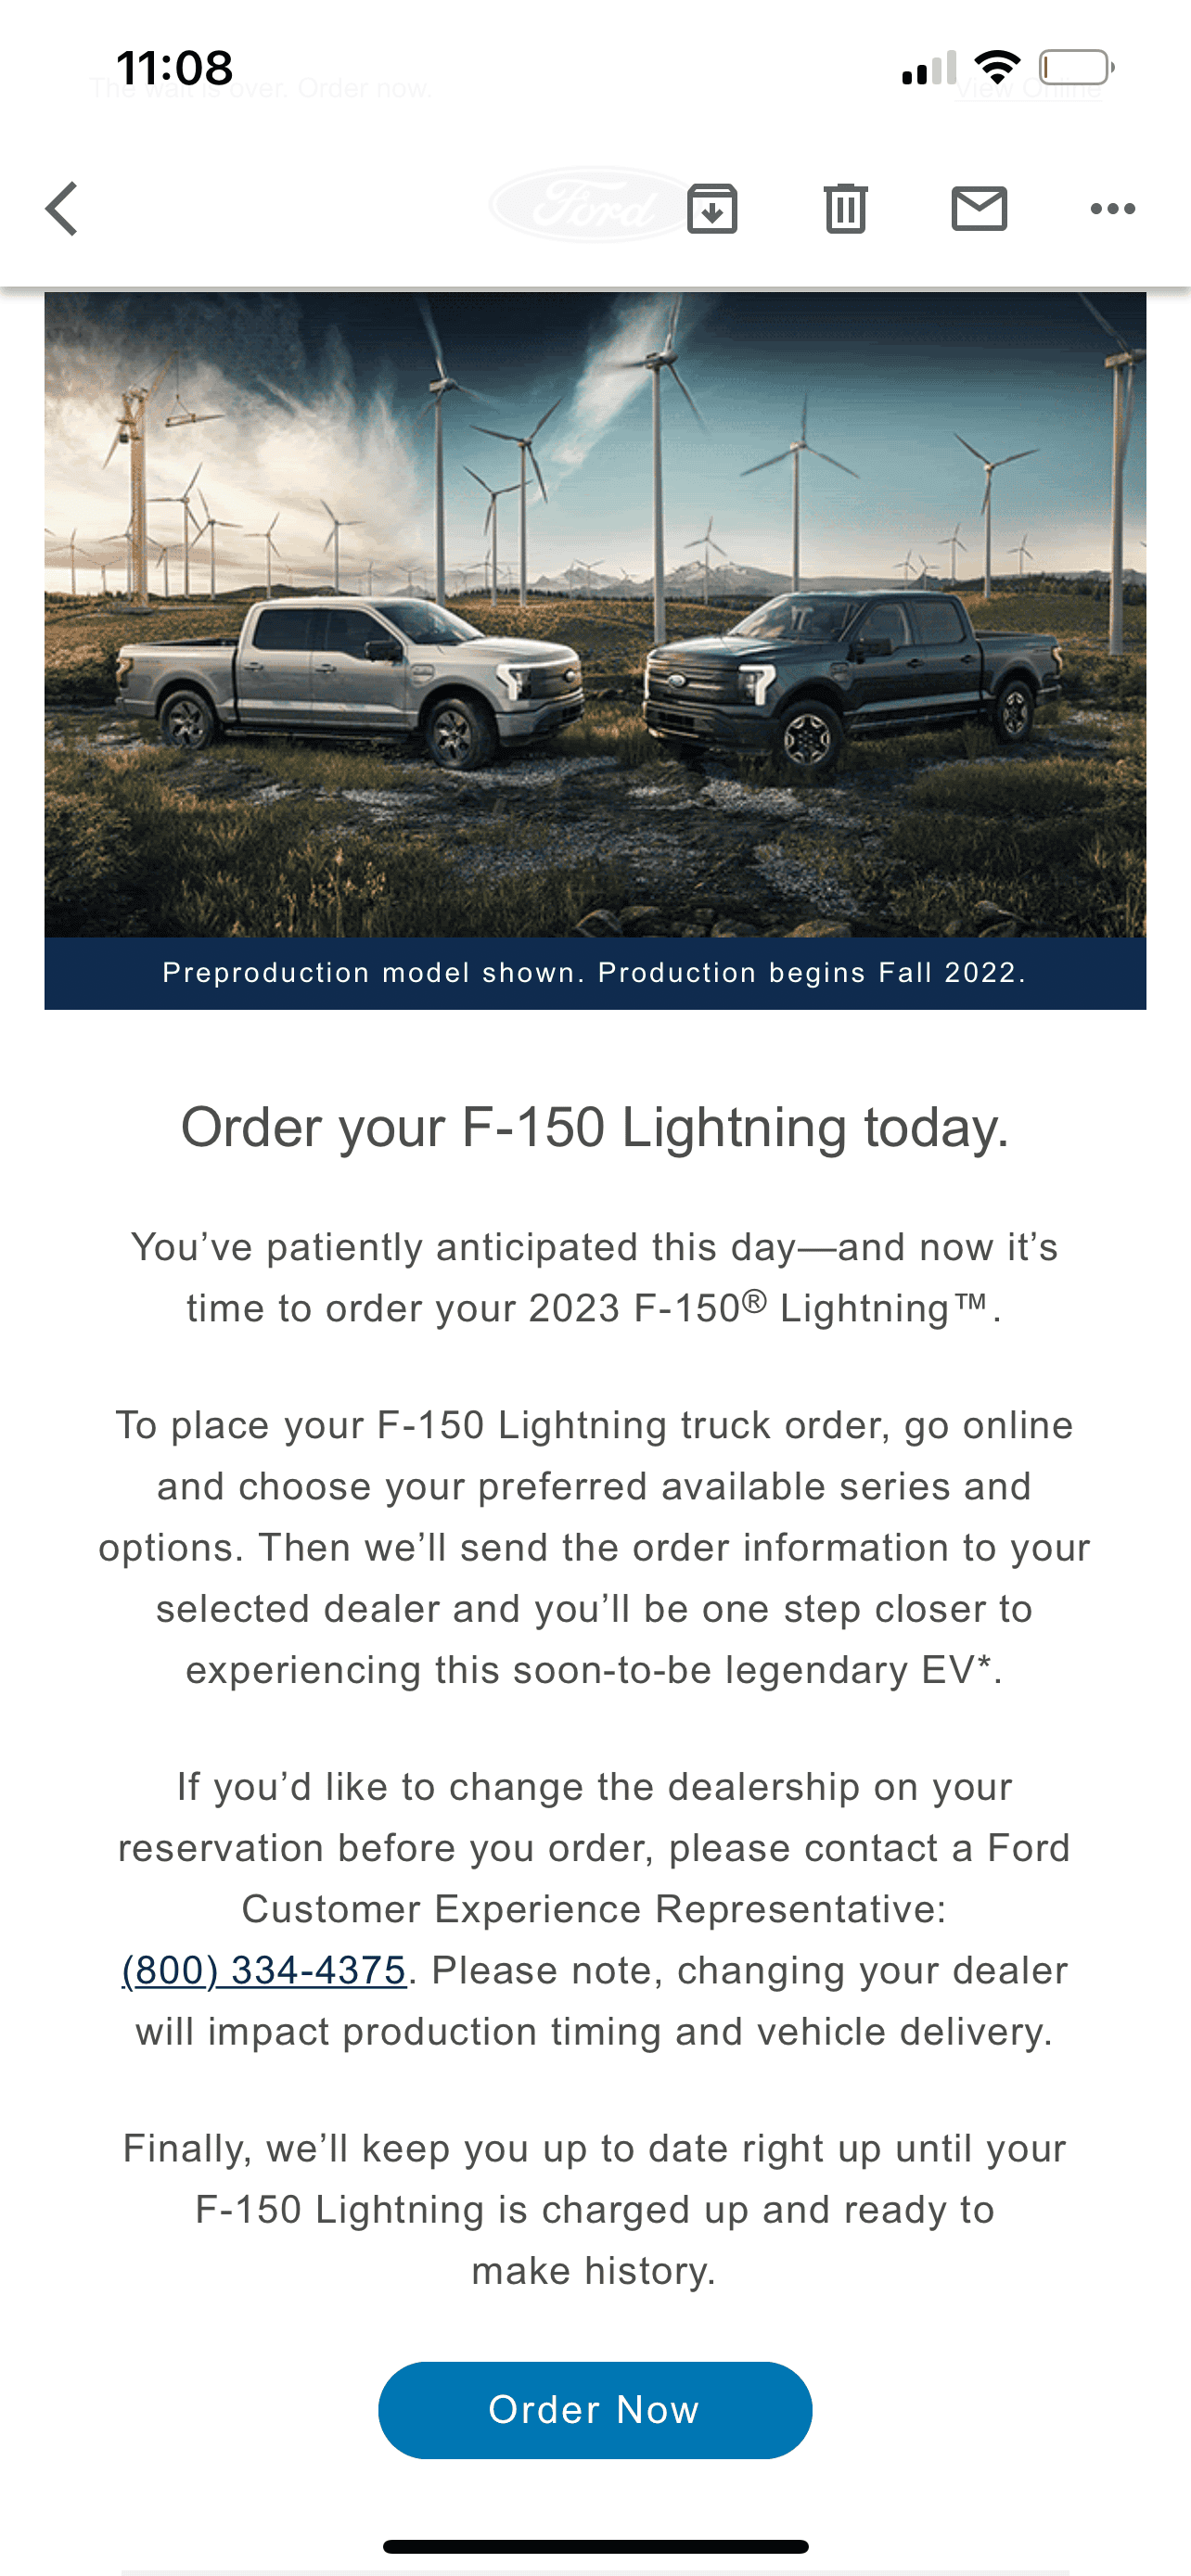 Ford F-150 Lightning 2023 wave 1 order invites have begun! B7457A01-B2A2-46FB-91CF-577D6D72F90C